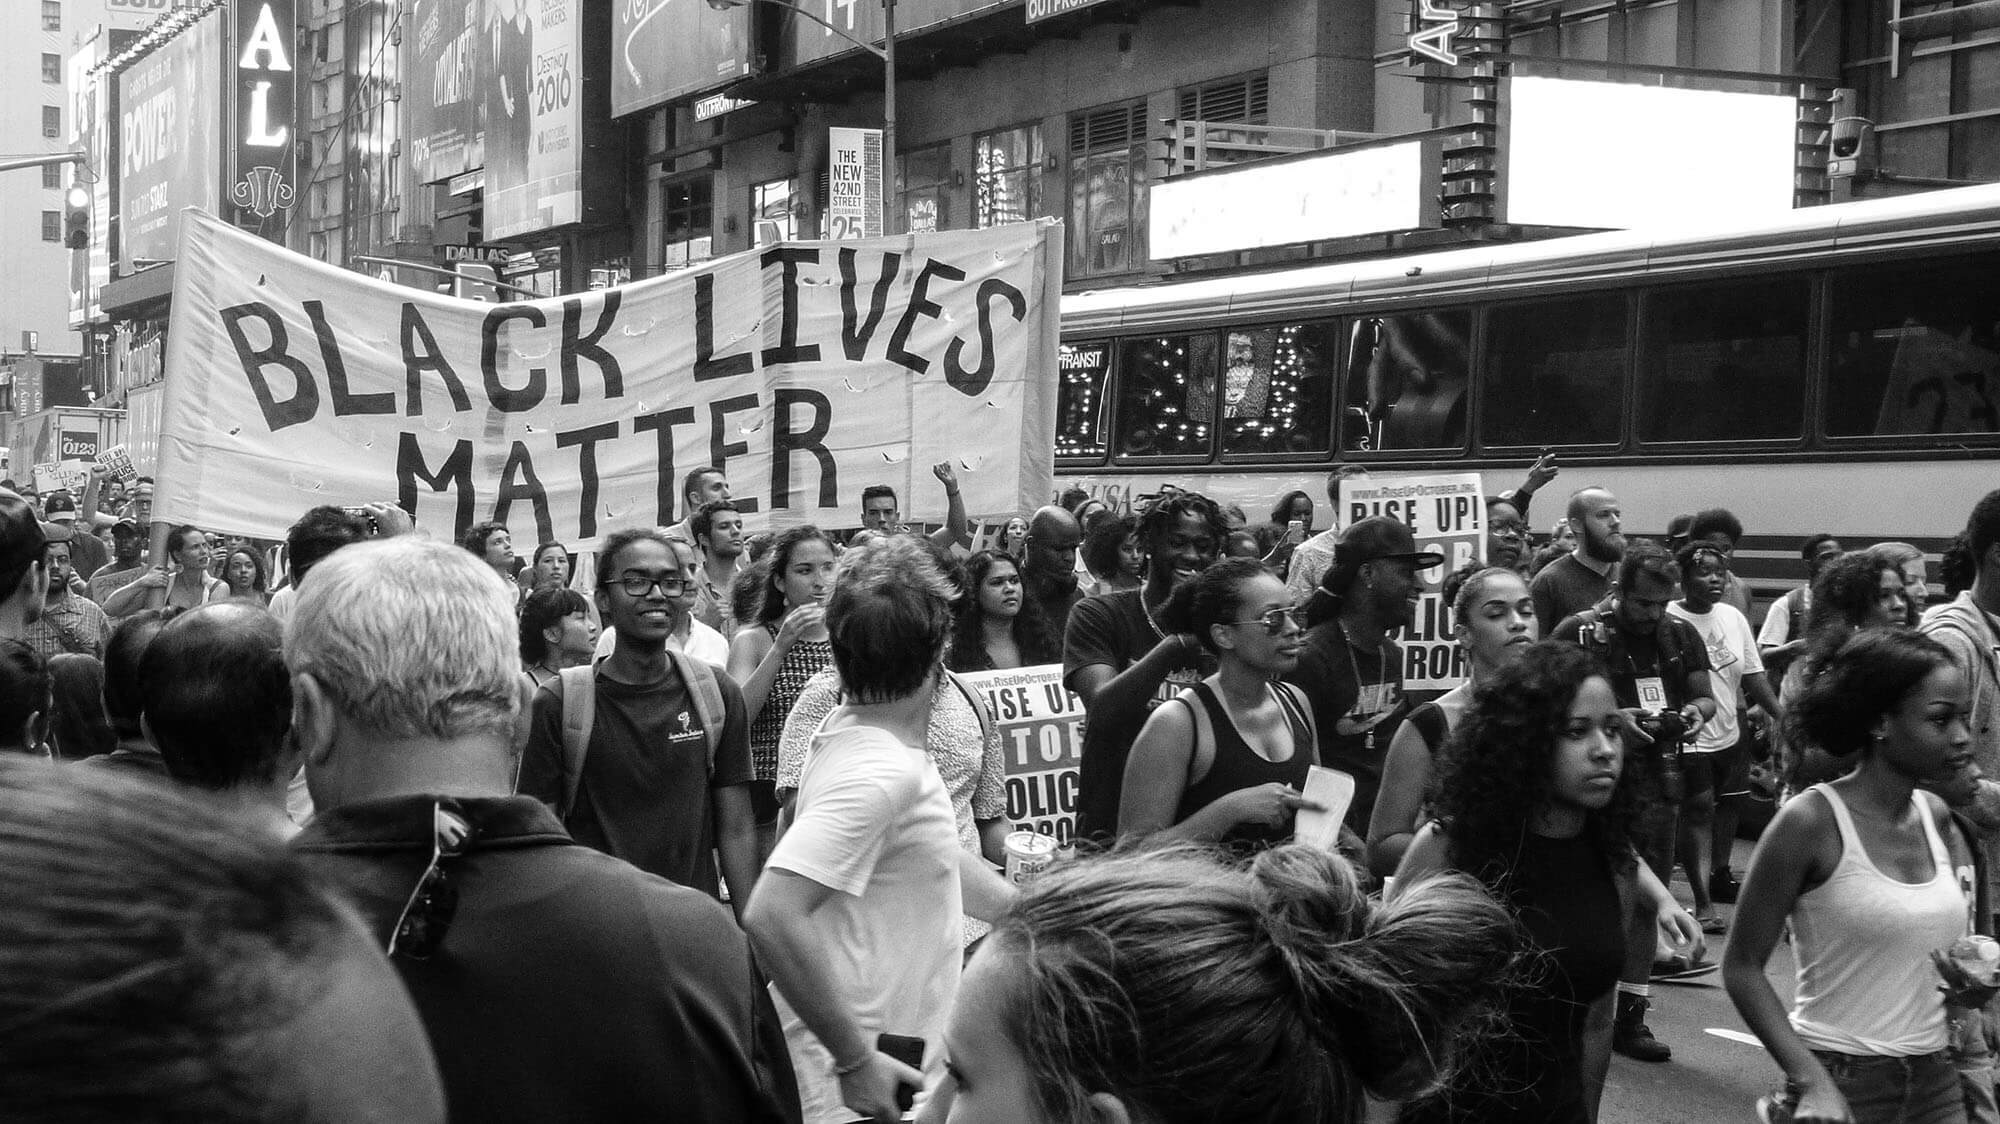 Black Lives Matter protest march, photo by Nicole Baster, Unsplash